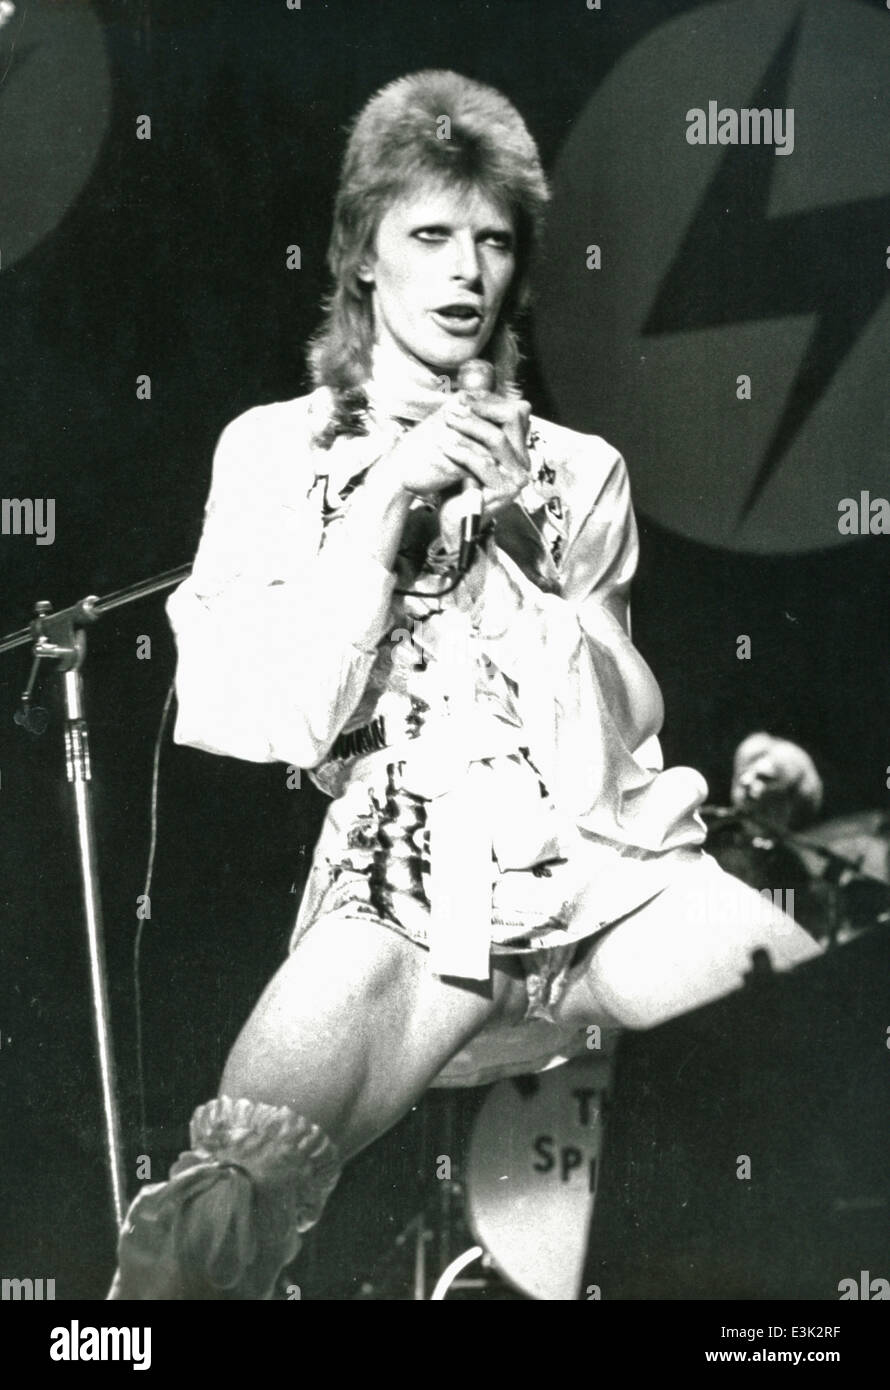 David Bowie au Hammersmith Odeon, 1973 Banque D'Images